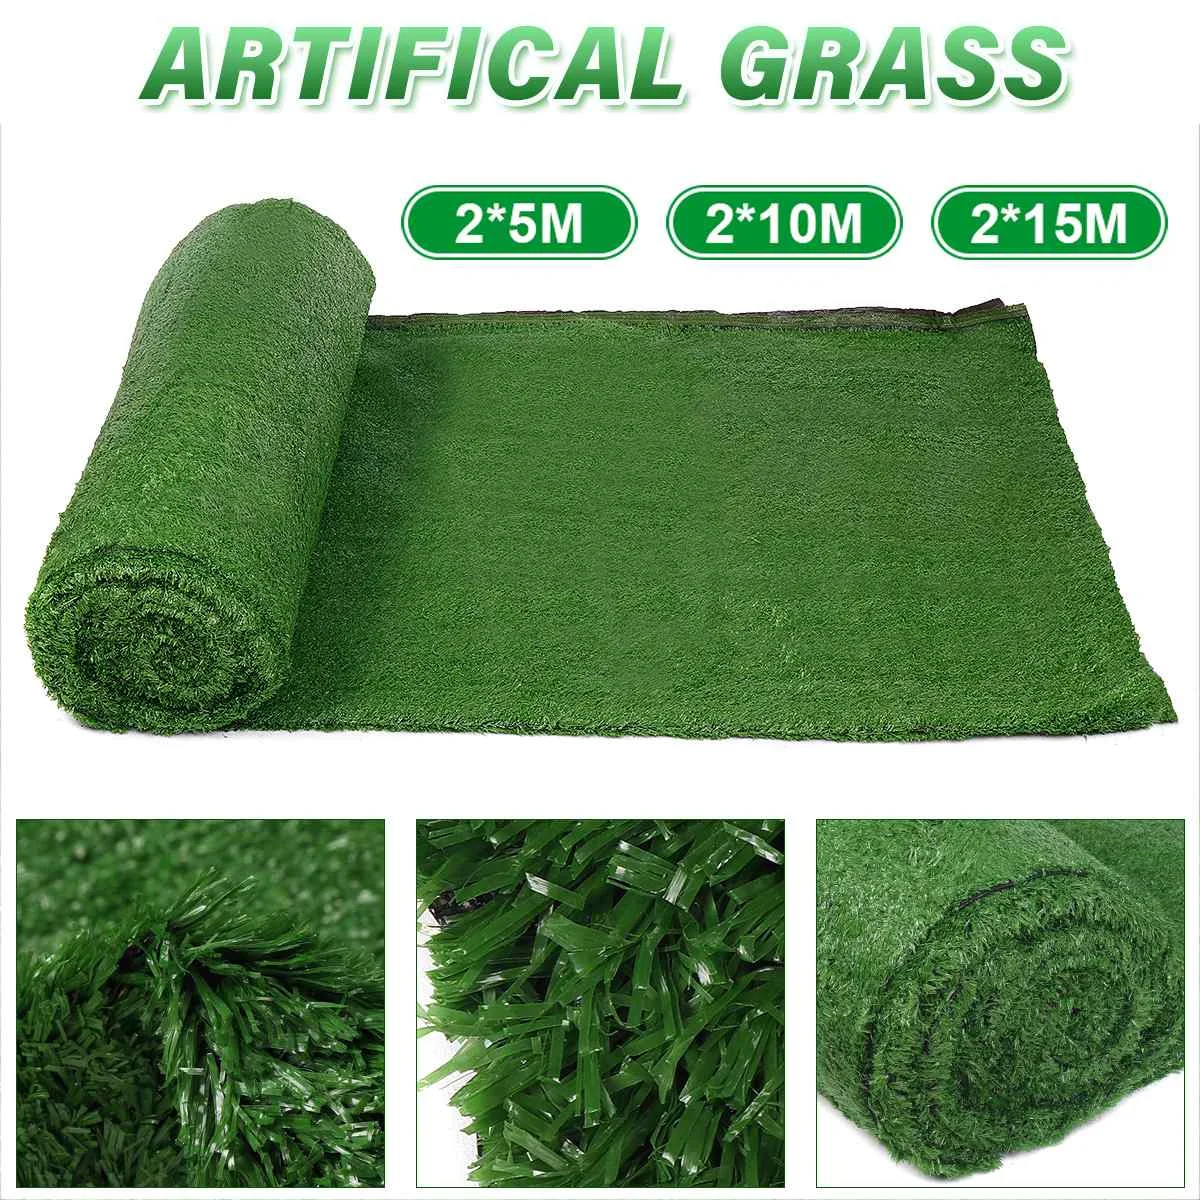 2x15M Thicken Artificial Lawn Outdoor Garden Artificial Grass Plants Non-slip For Country House Golf/Football Field Decor Lawn